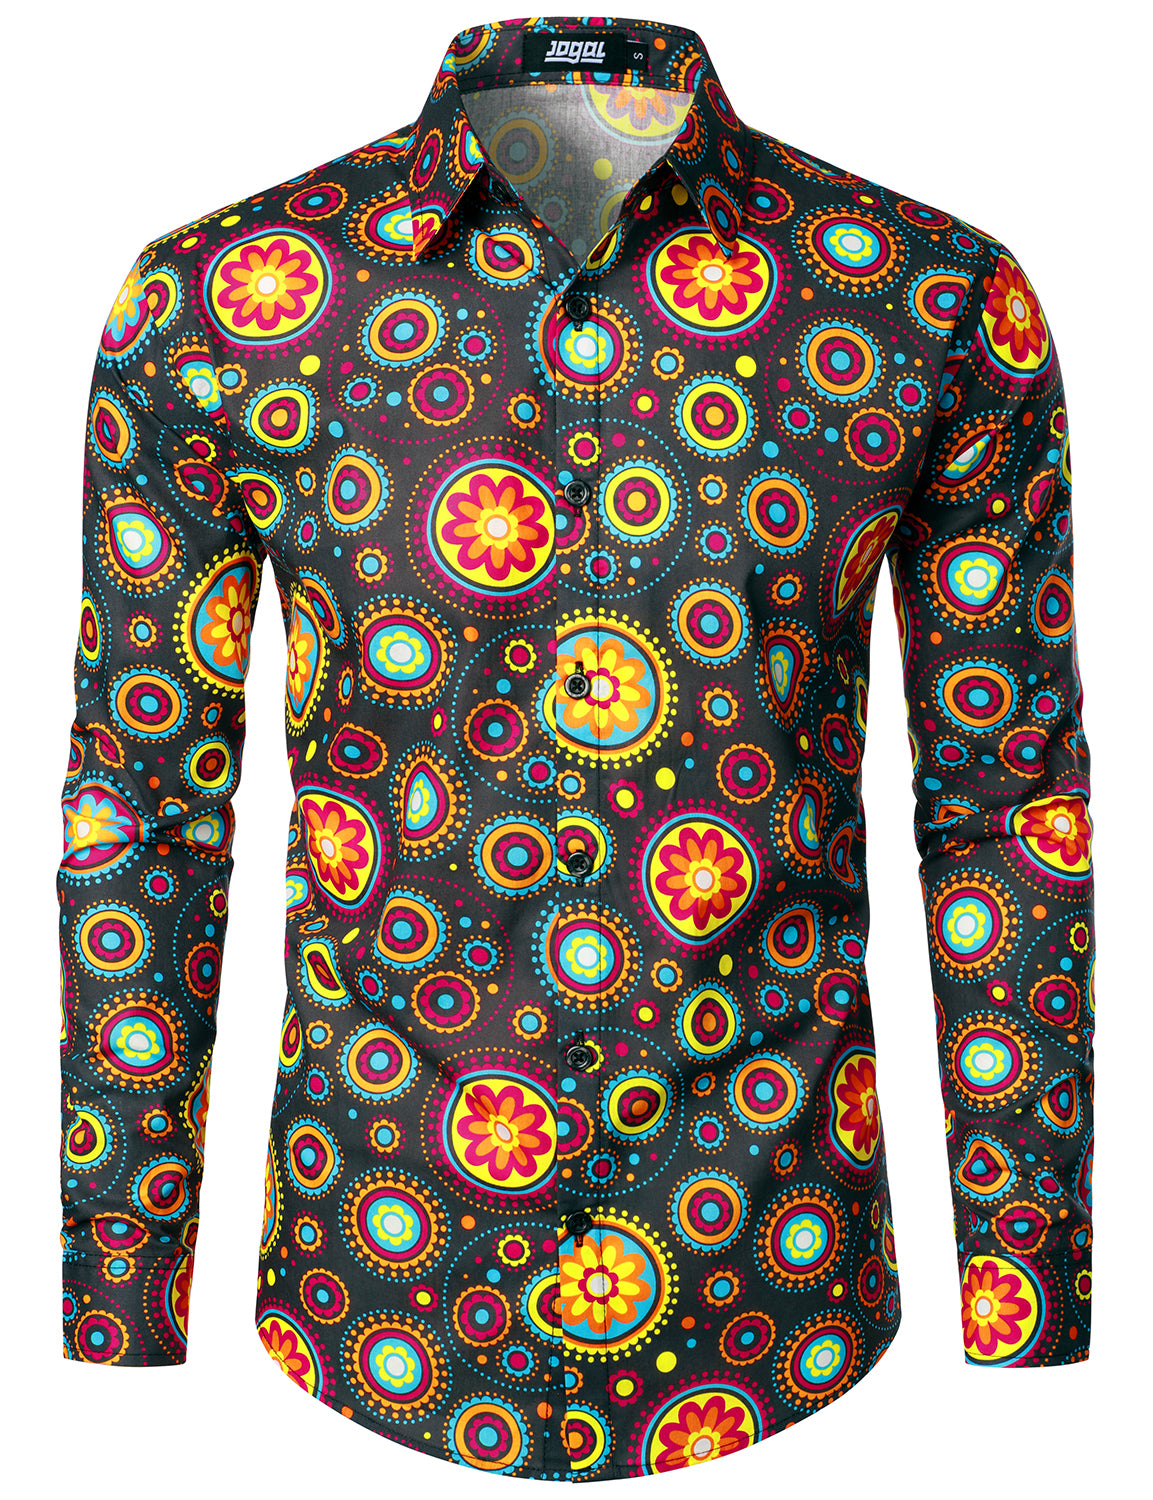 Retro Floral Print Shirt > Casual Shirt > Button Up Shirt